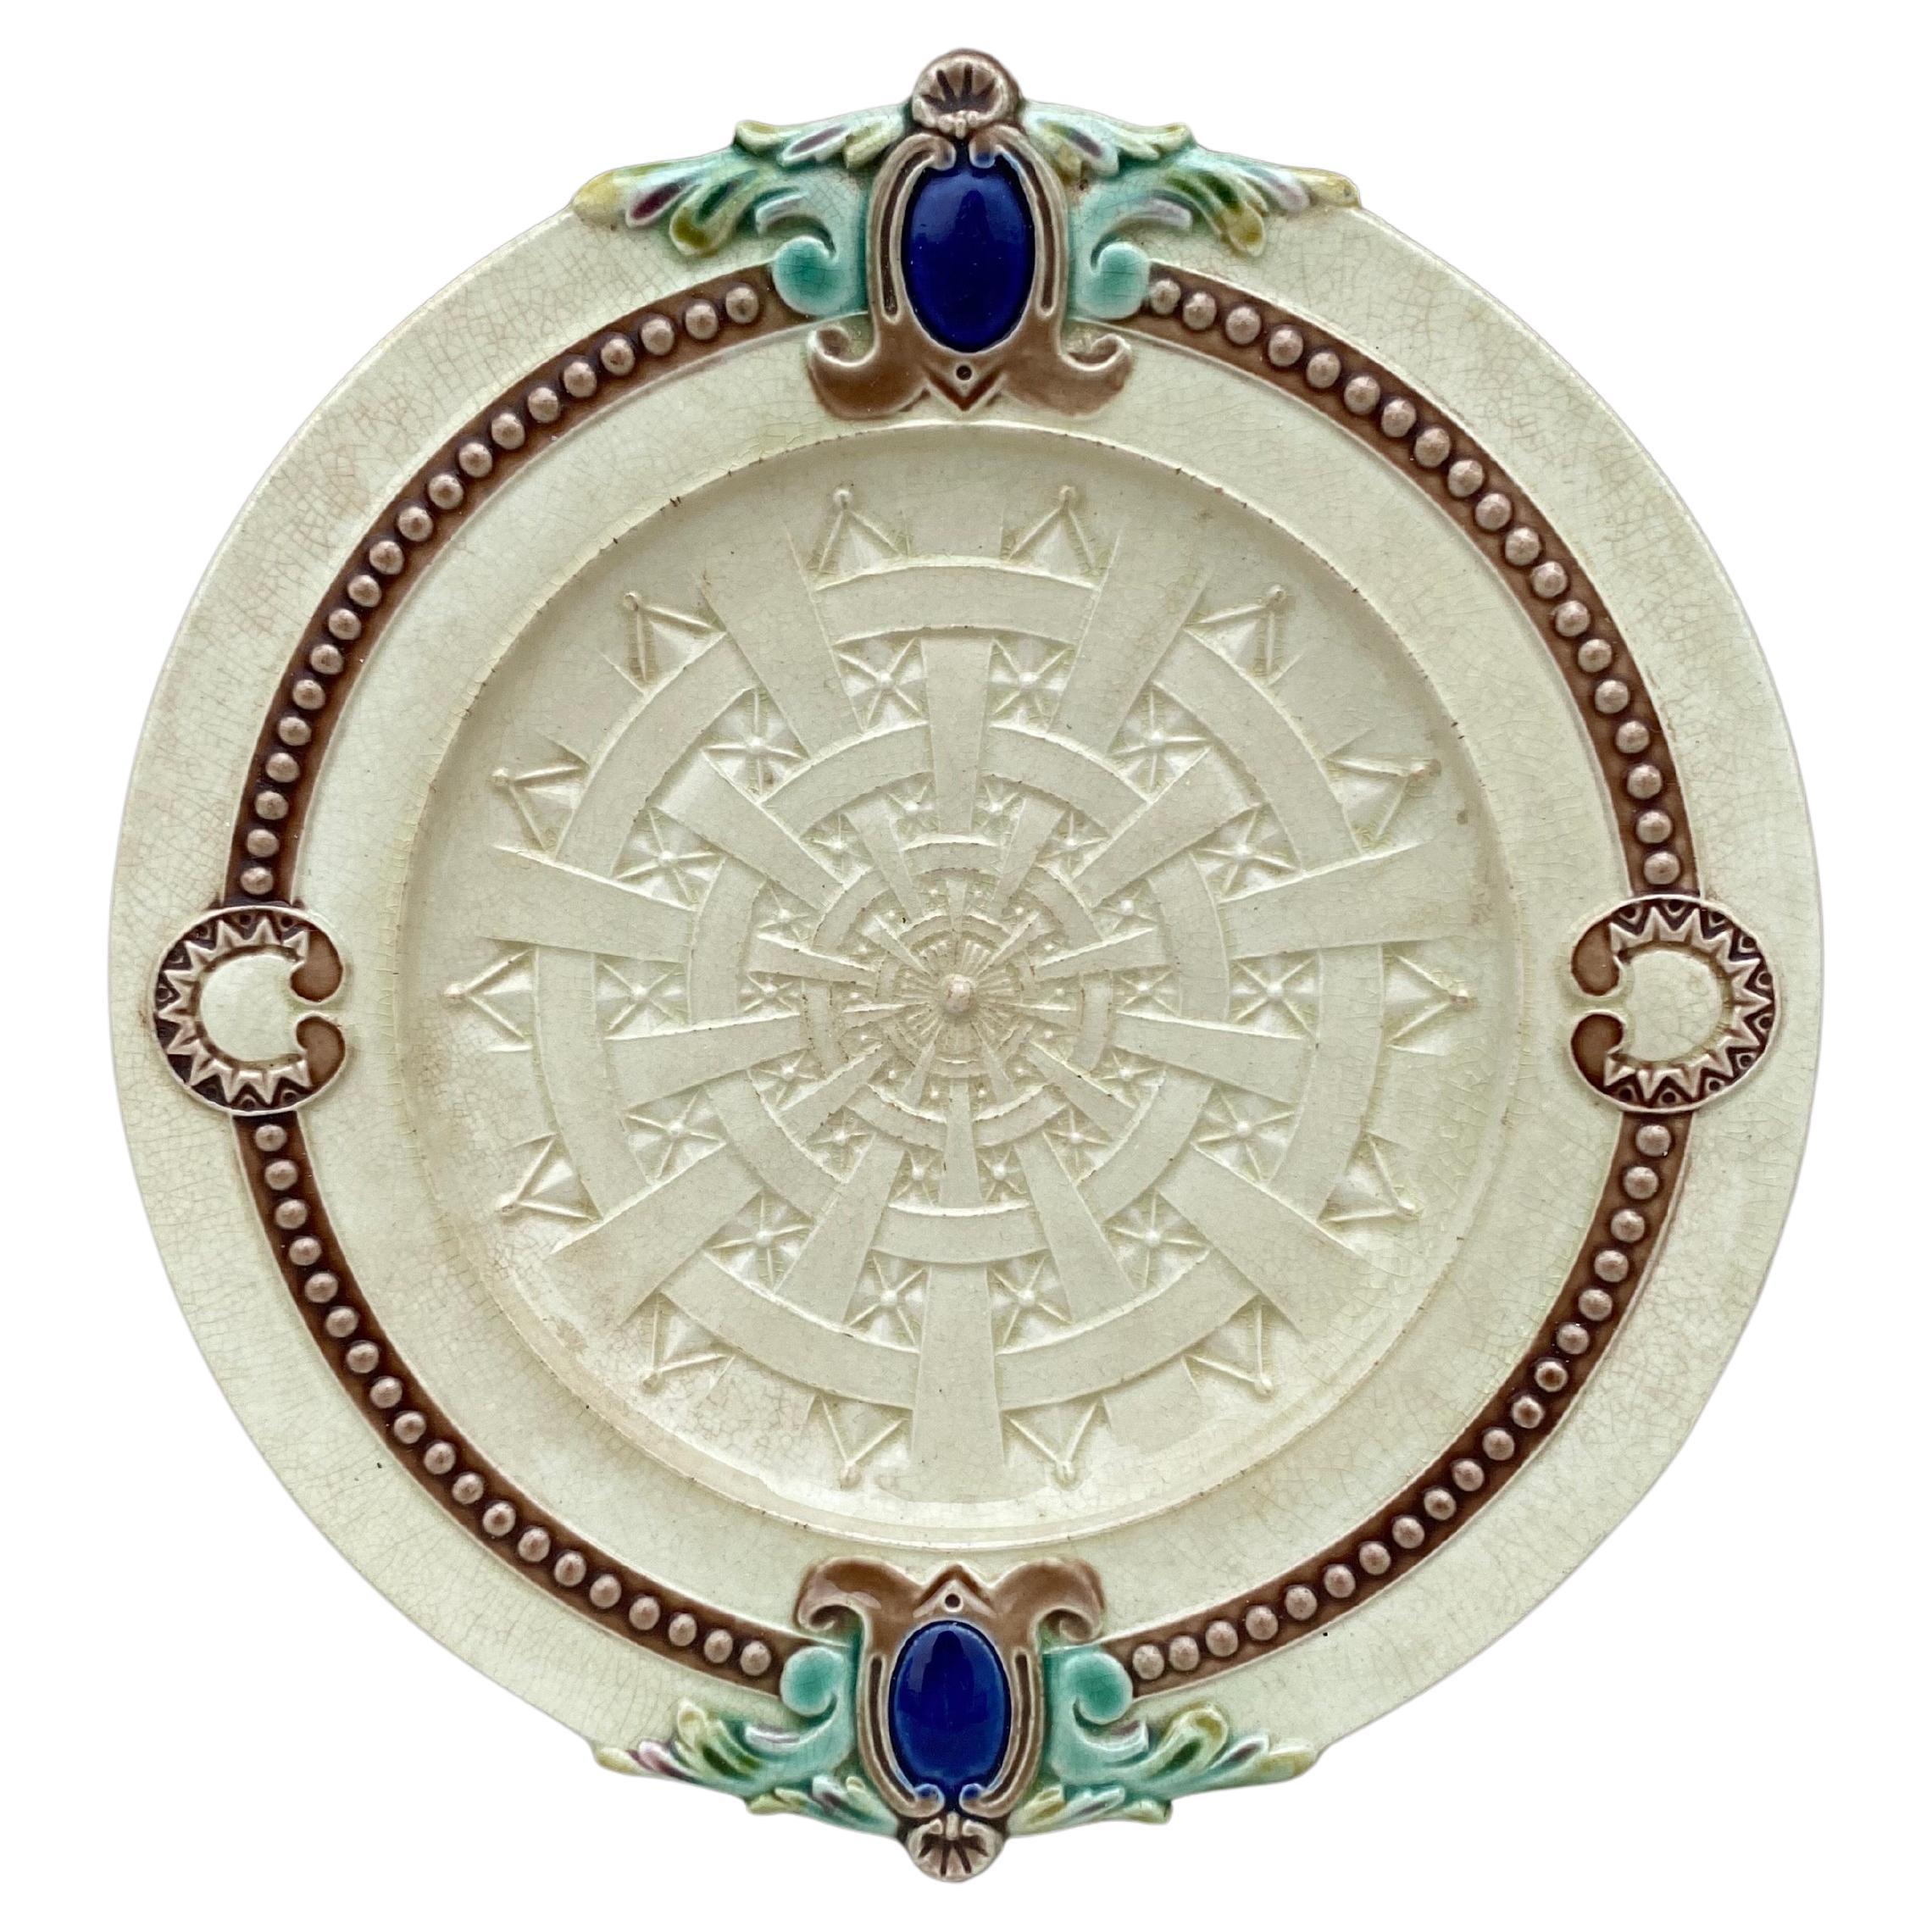 French Majolica Plate, Circa 1890